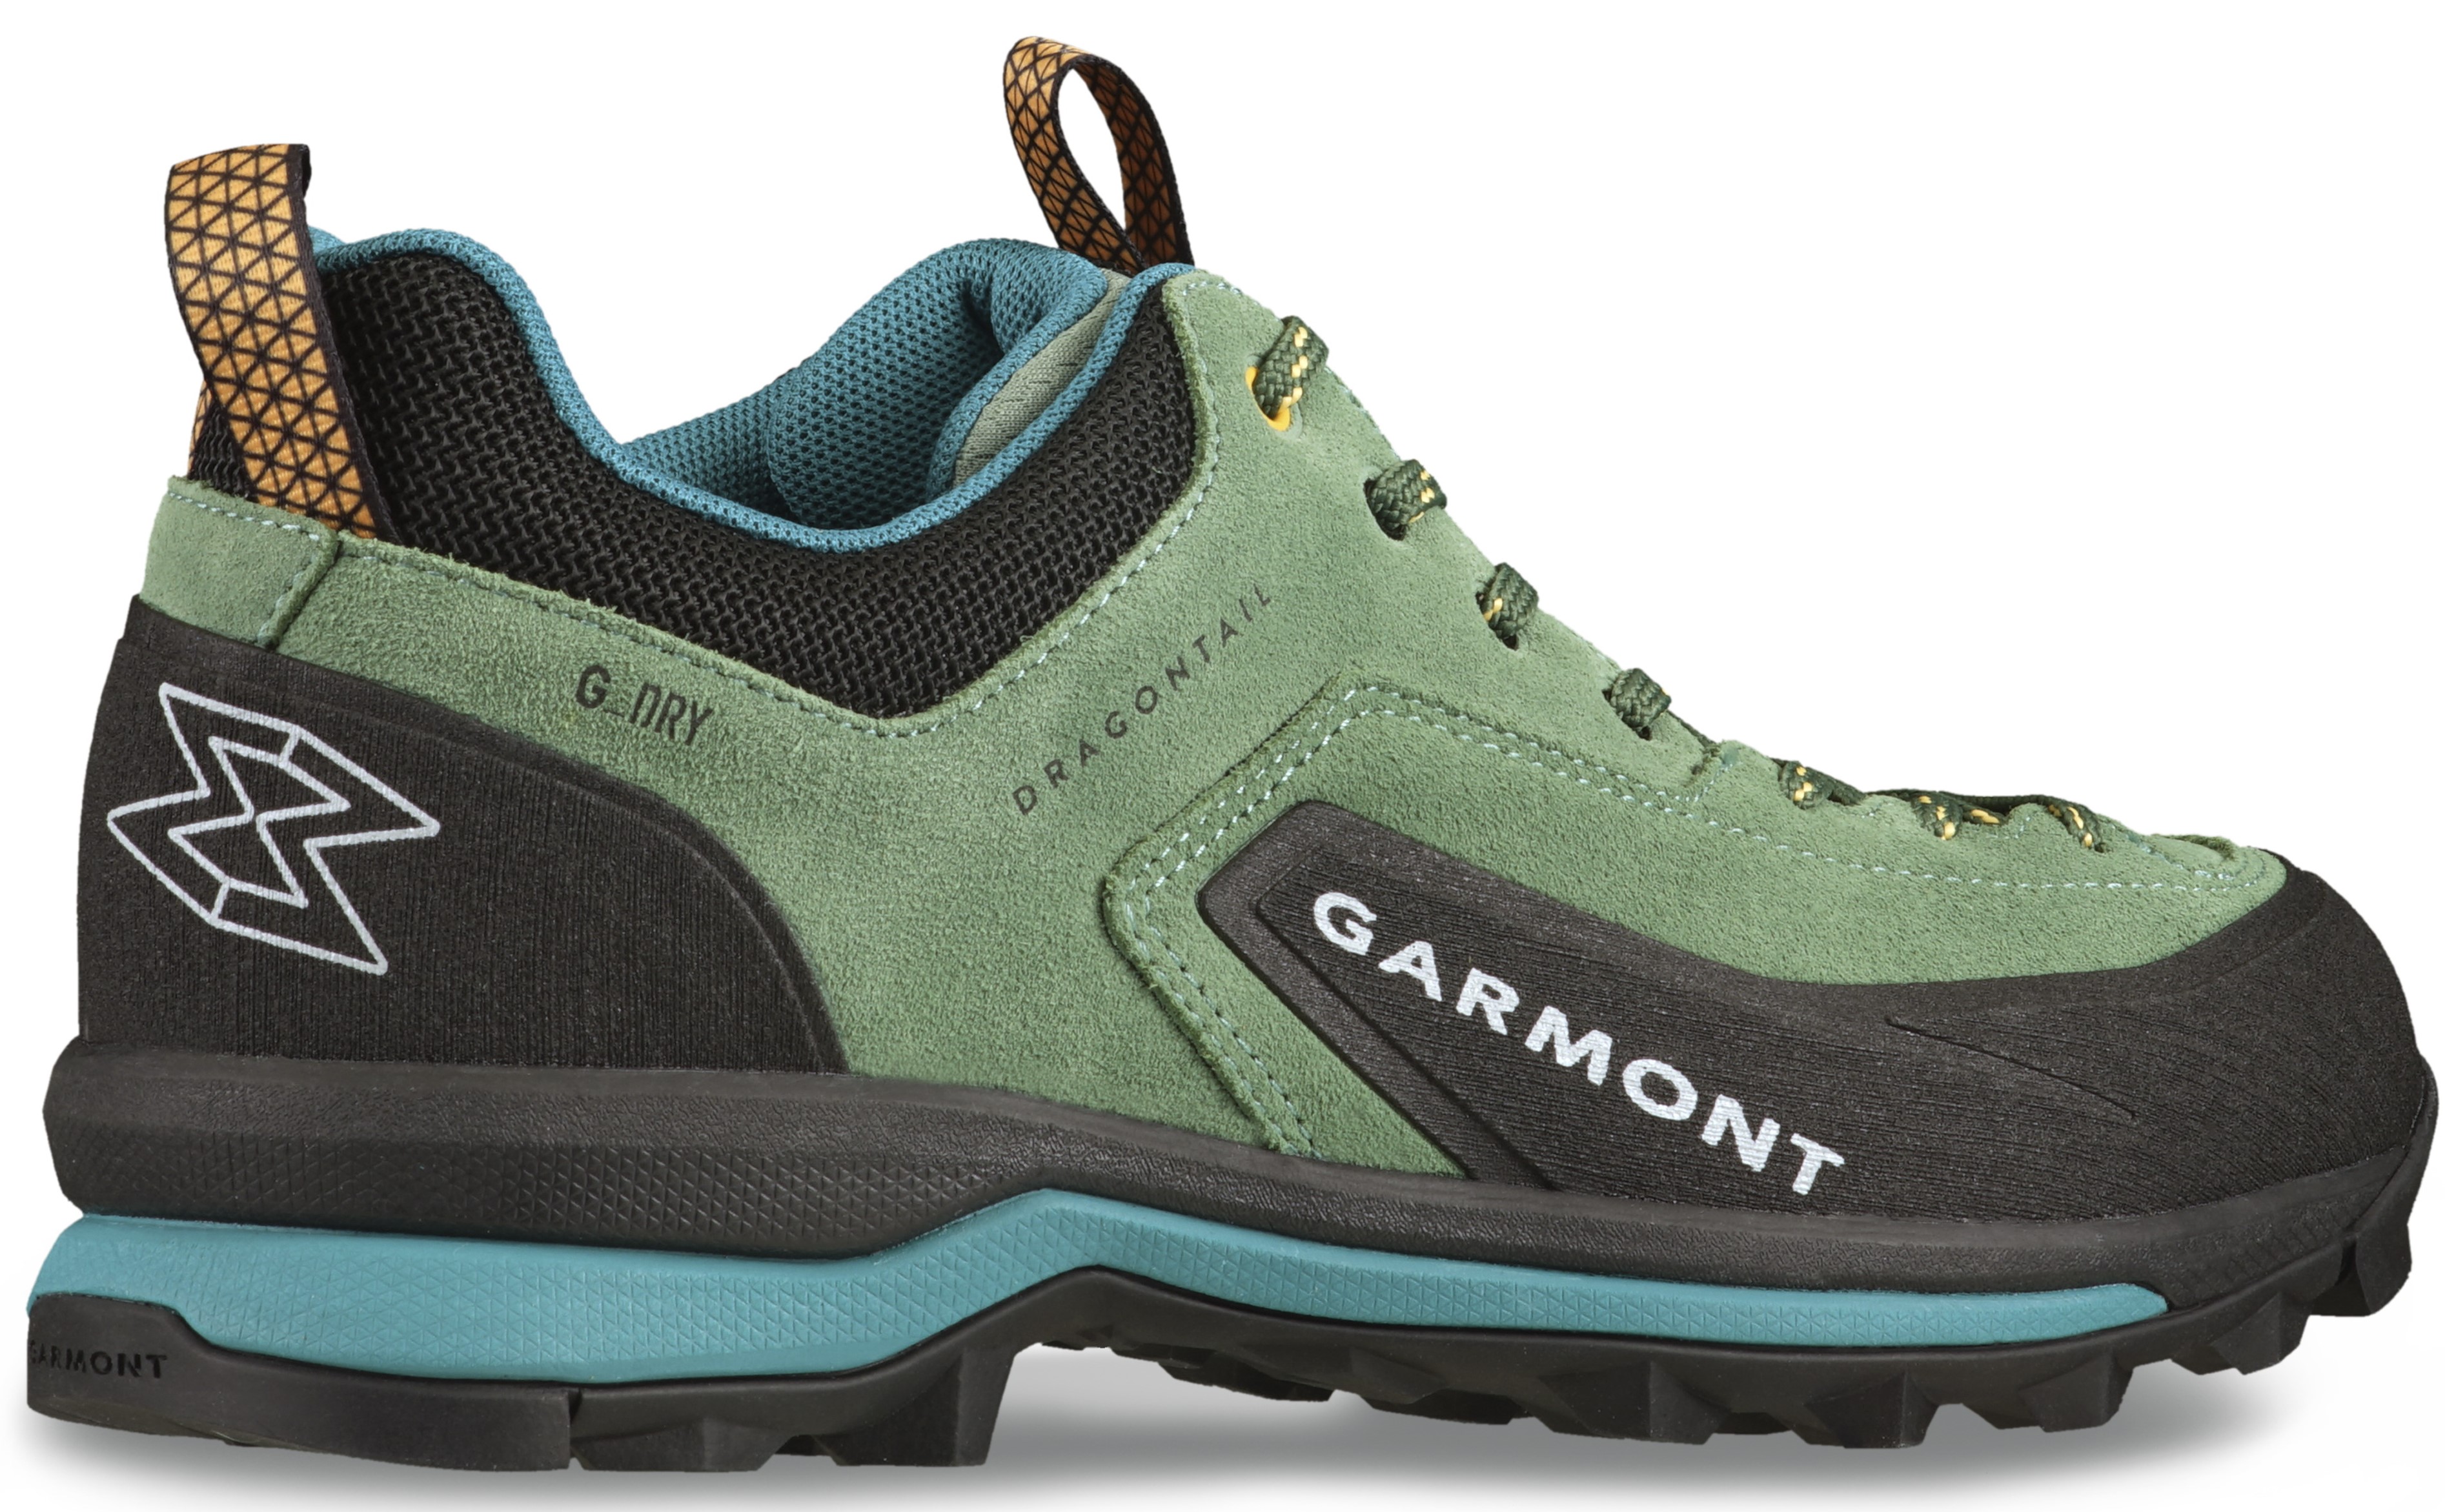 Garmont DRAGONTAIL G-DRY frost green/green Velikost: 38 dámské boty